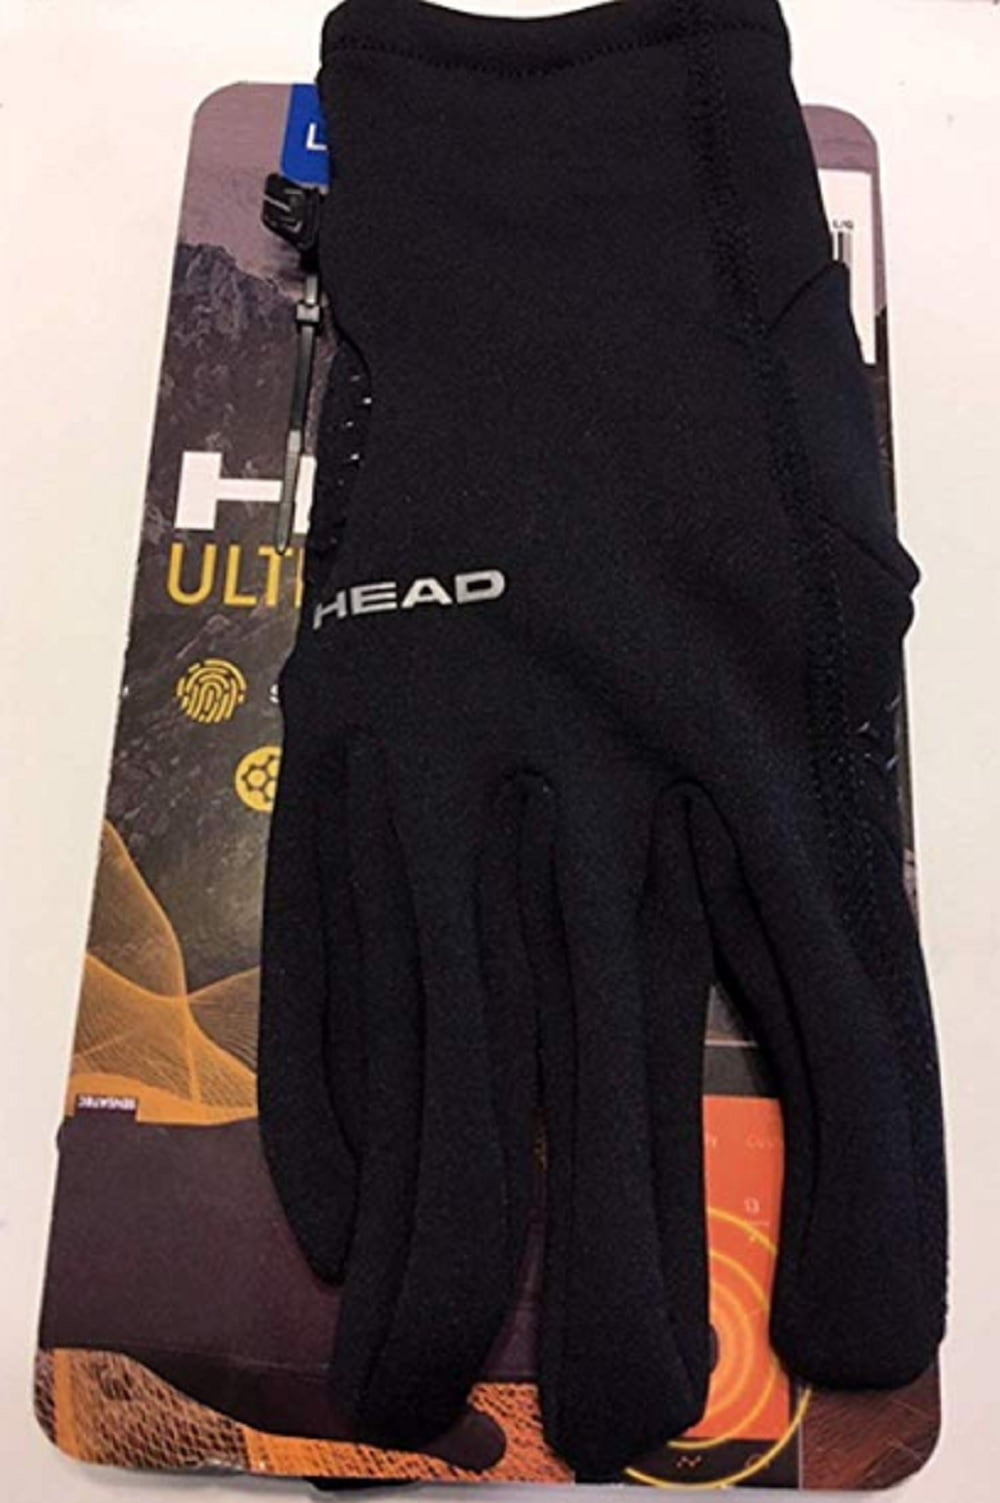 Head womens Touchscreen Running Gloves size S L 